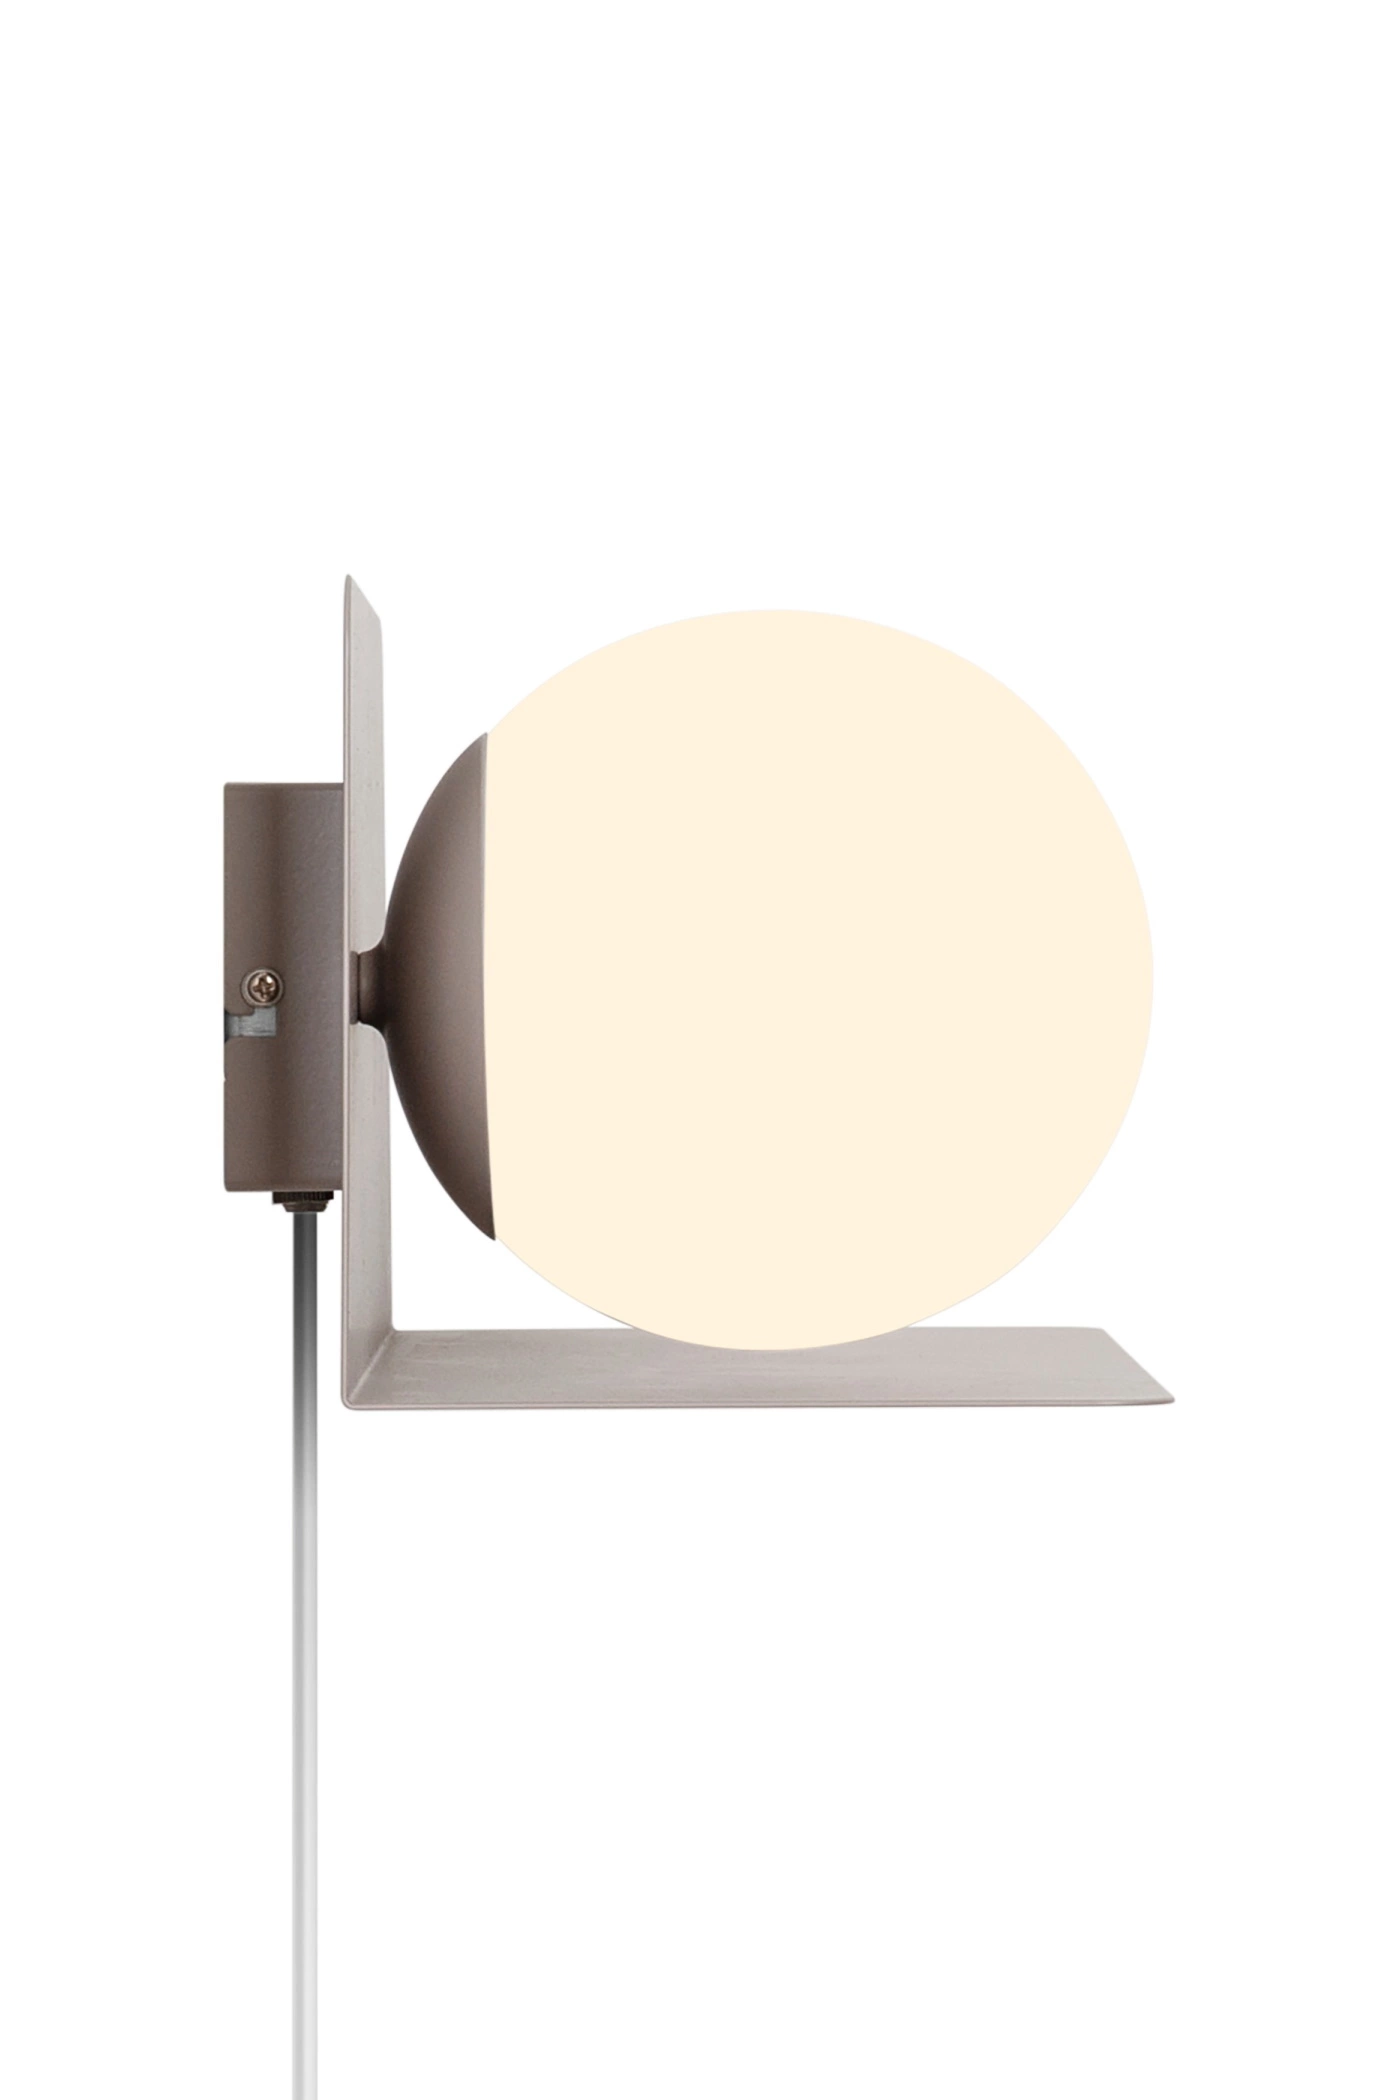   
                        
                        Бра NORDLUX (Дания) 11035    
                         в стиле Модерн.  
                        Тип источника света: светодиодная лампа, сменная.                                                 Цвета плафонов и подвесок: Белый.                         Материал: Стекло.                          фото 3